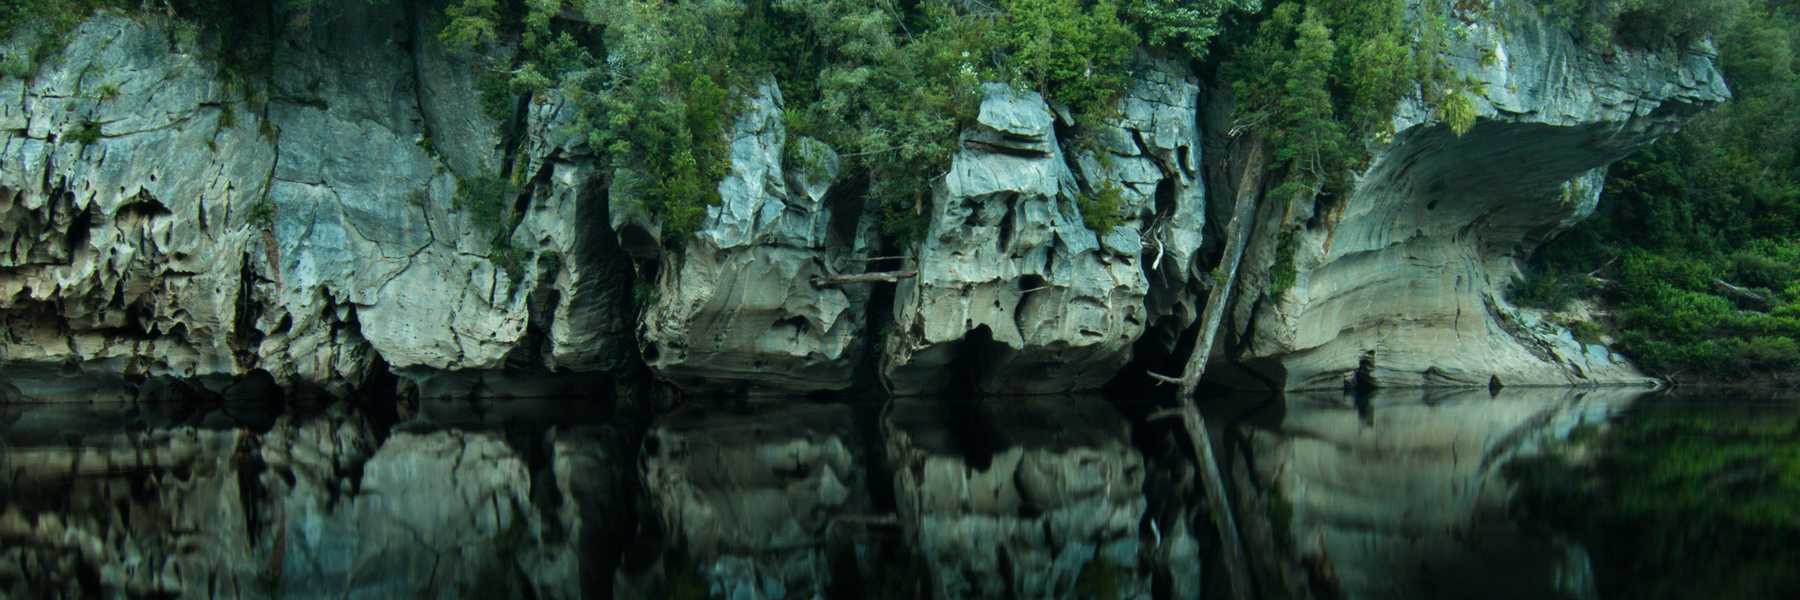 mirror reflections at Verandah Cliffs along the Franklin River